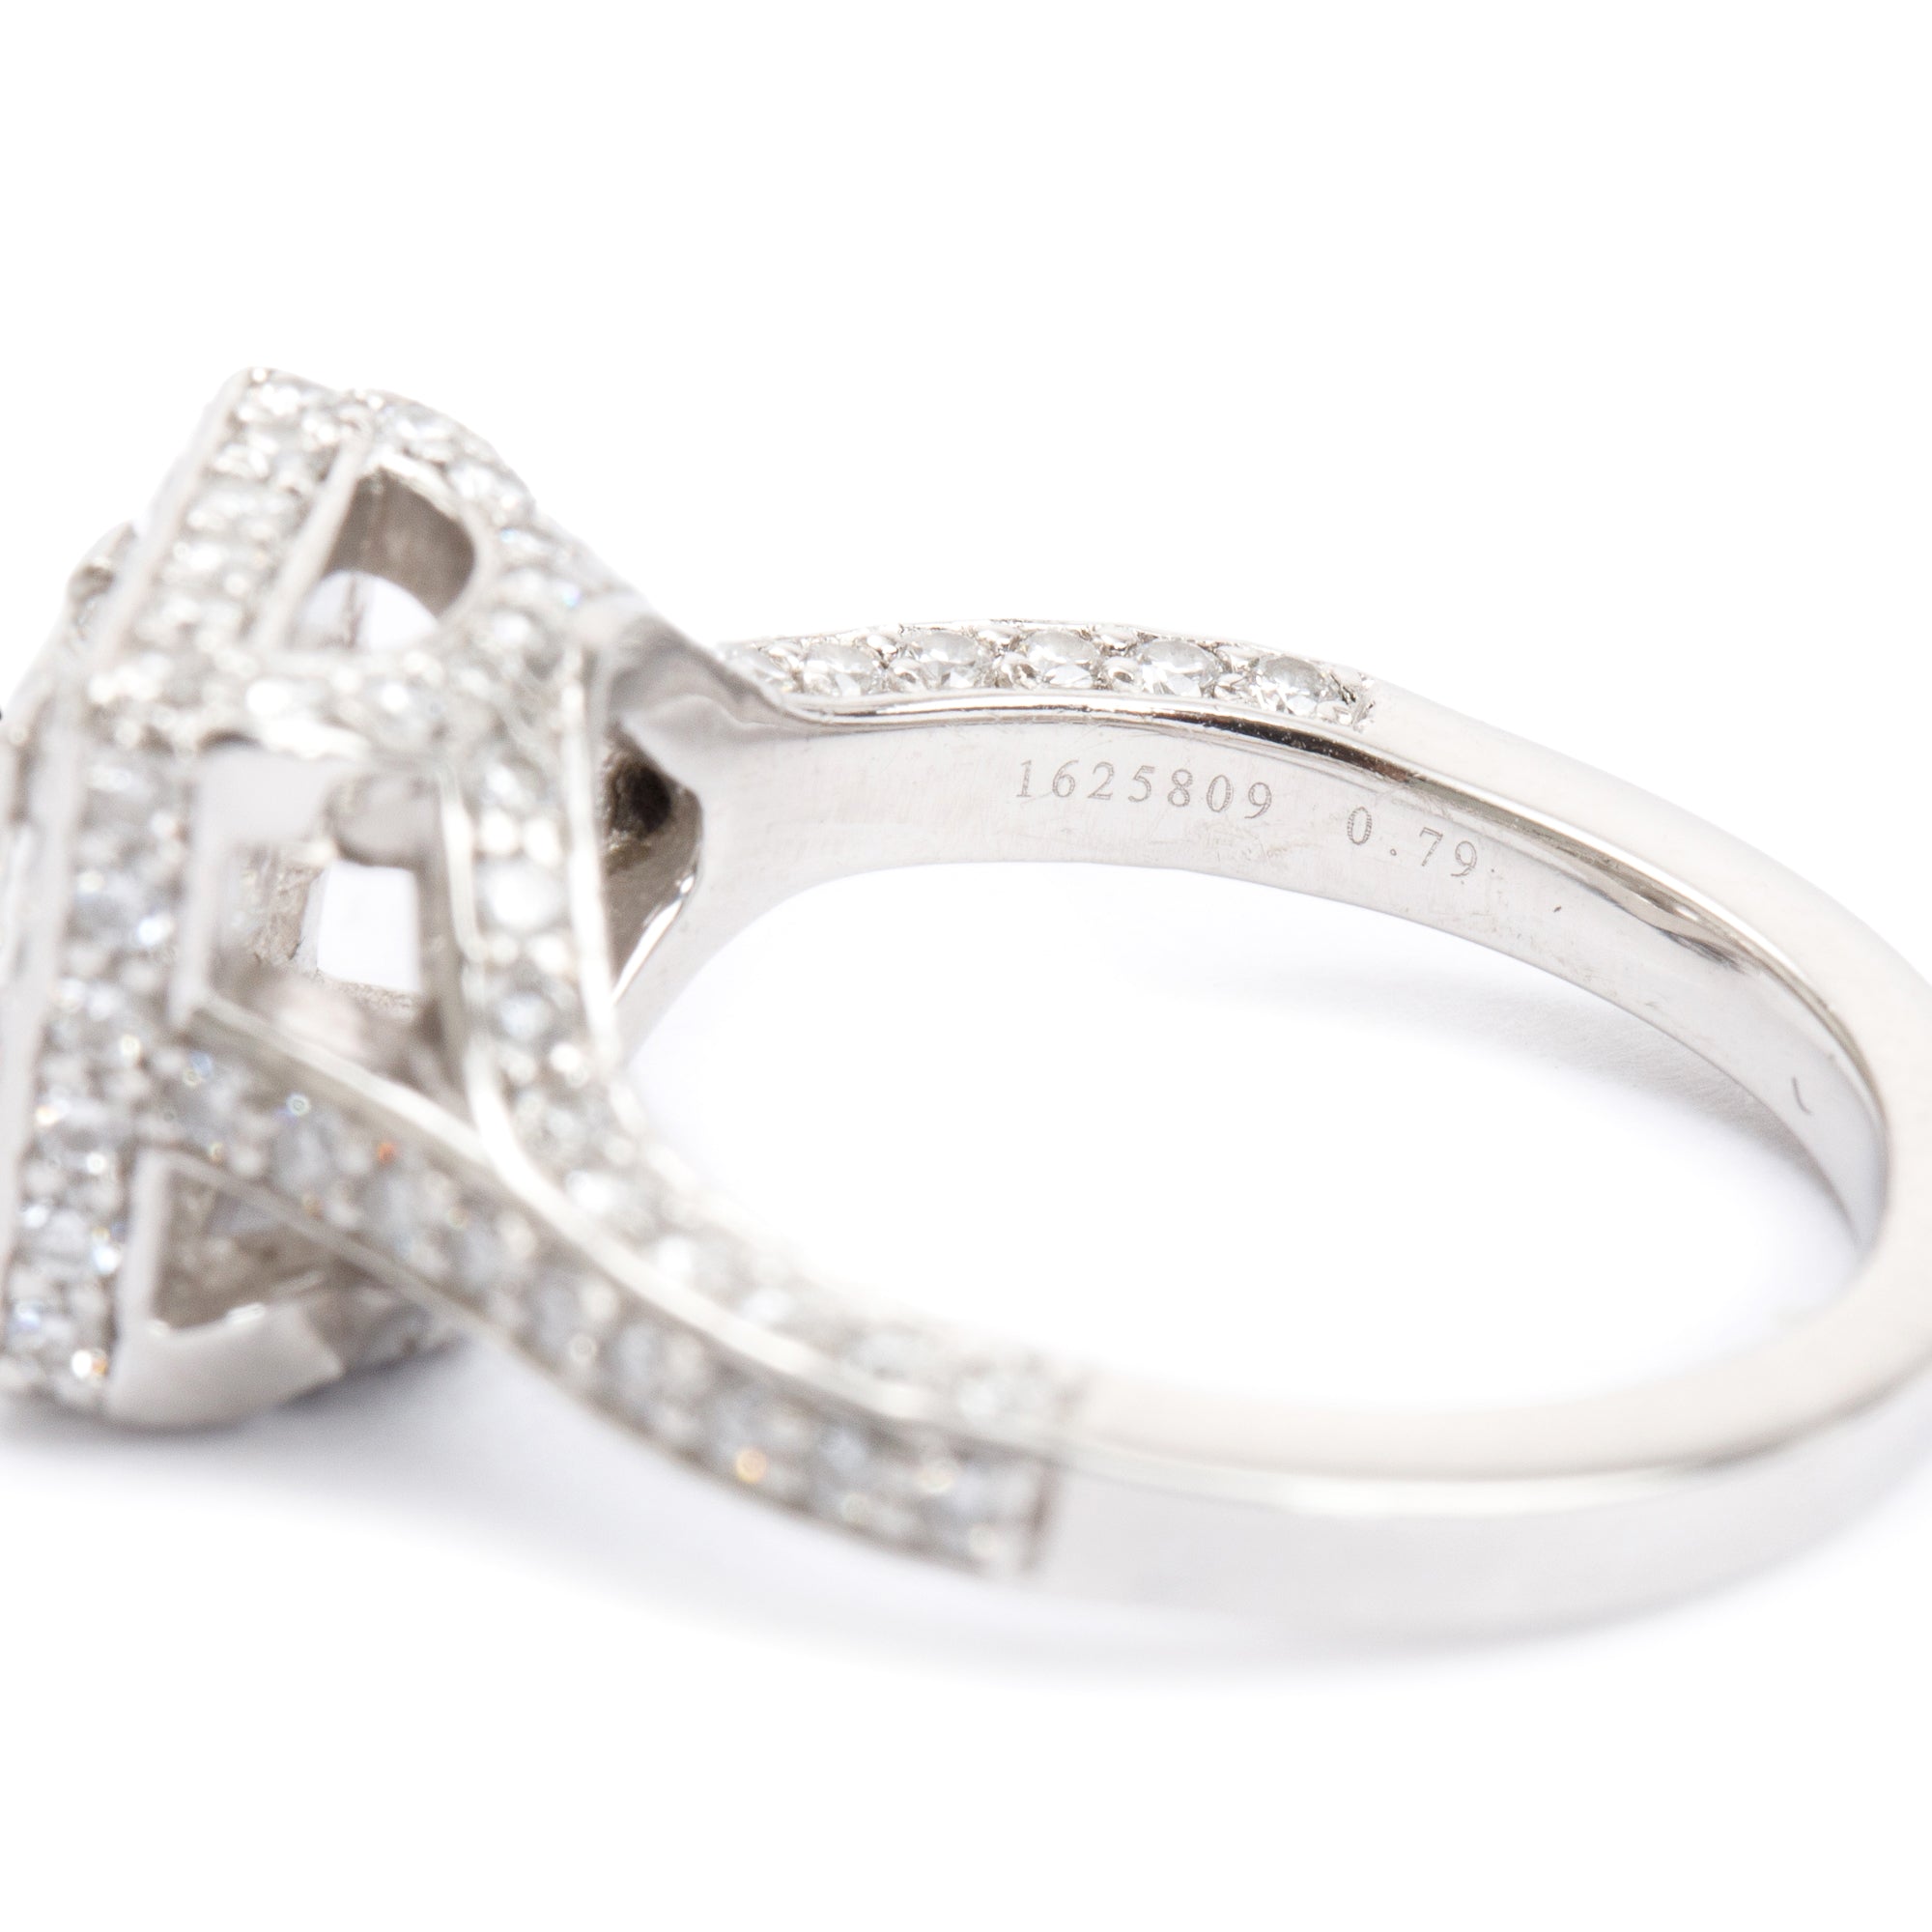 Birks Canadian Diamond and Sapphire Ring